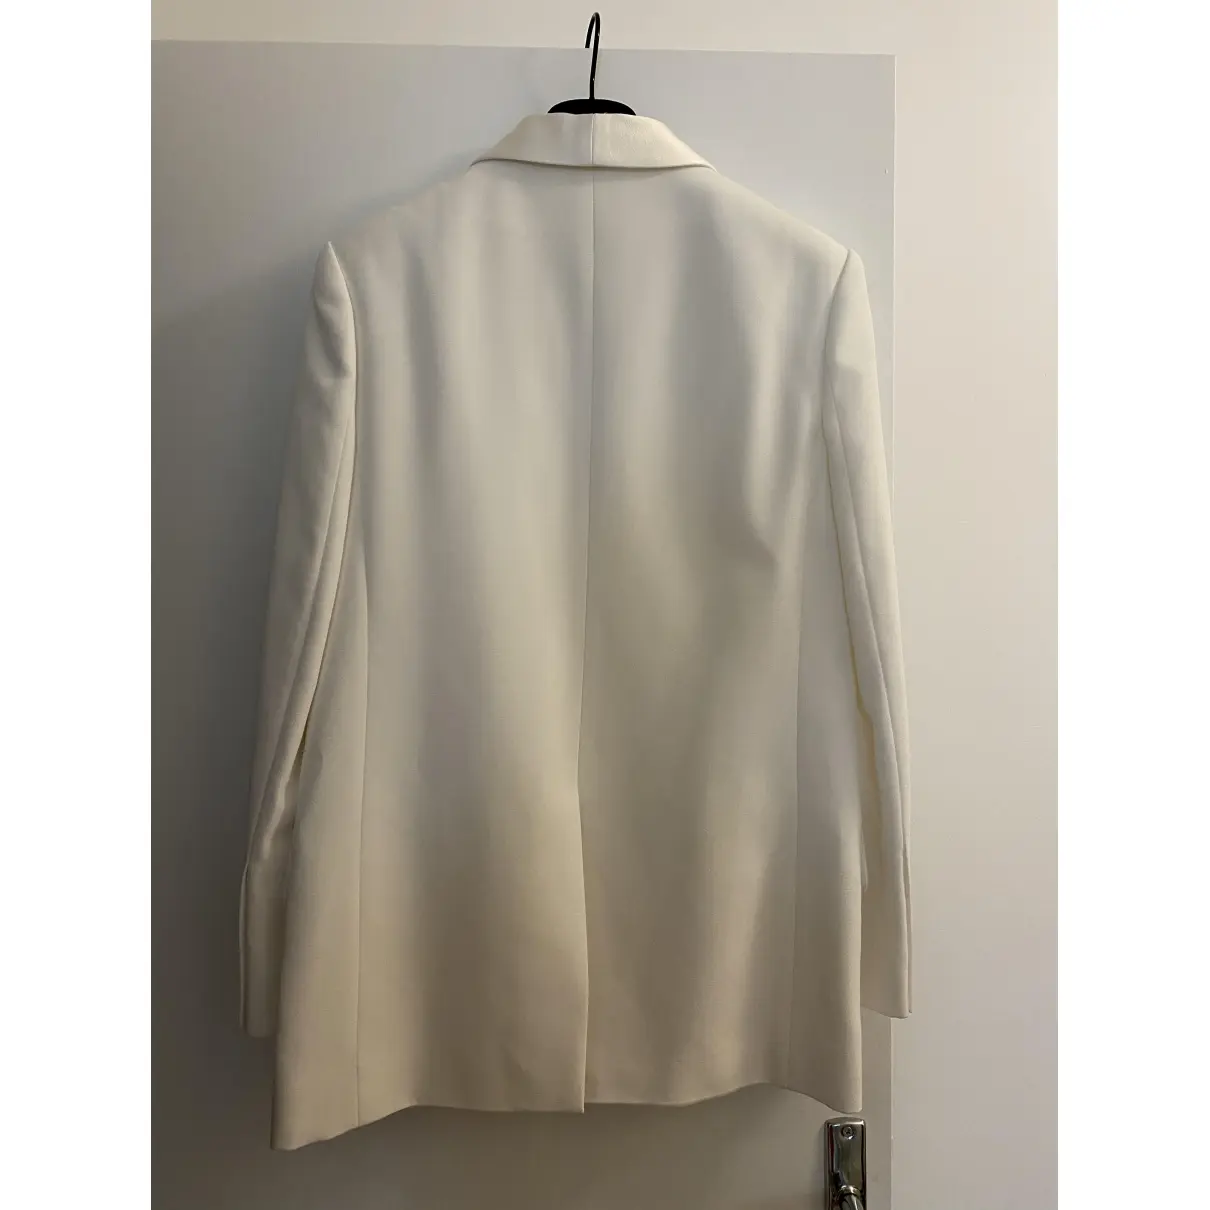 Buy Balmain White Viscose Jacket online